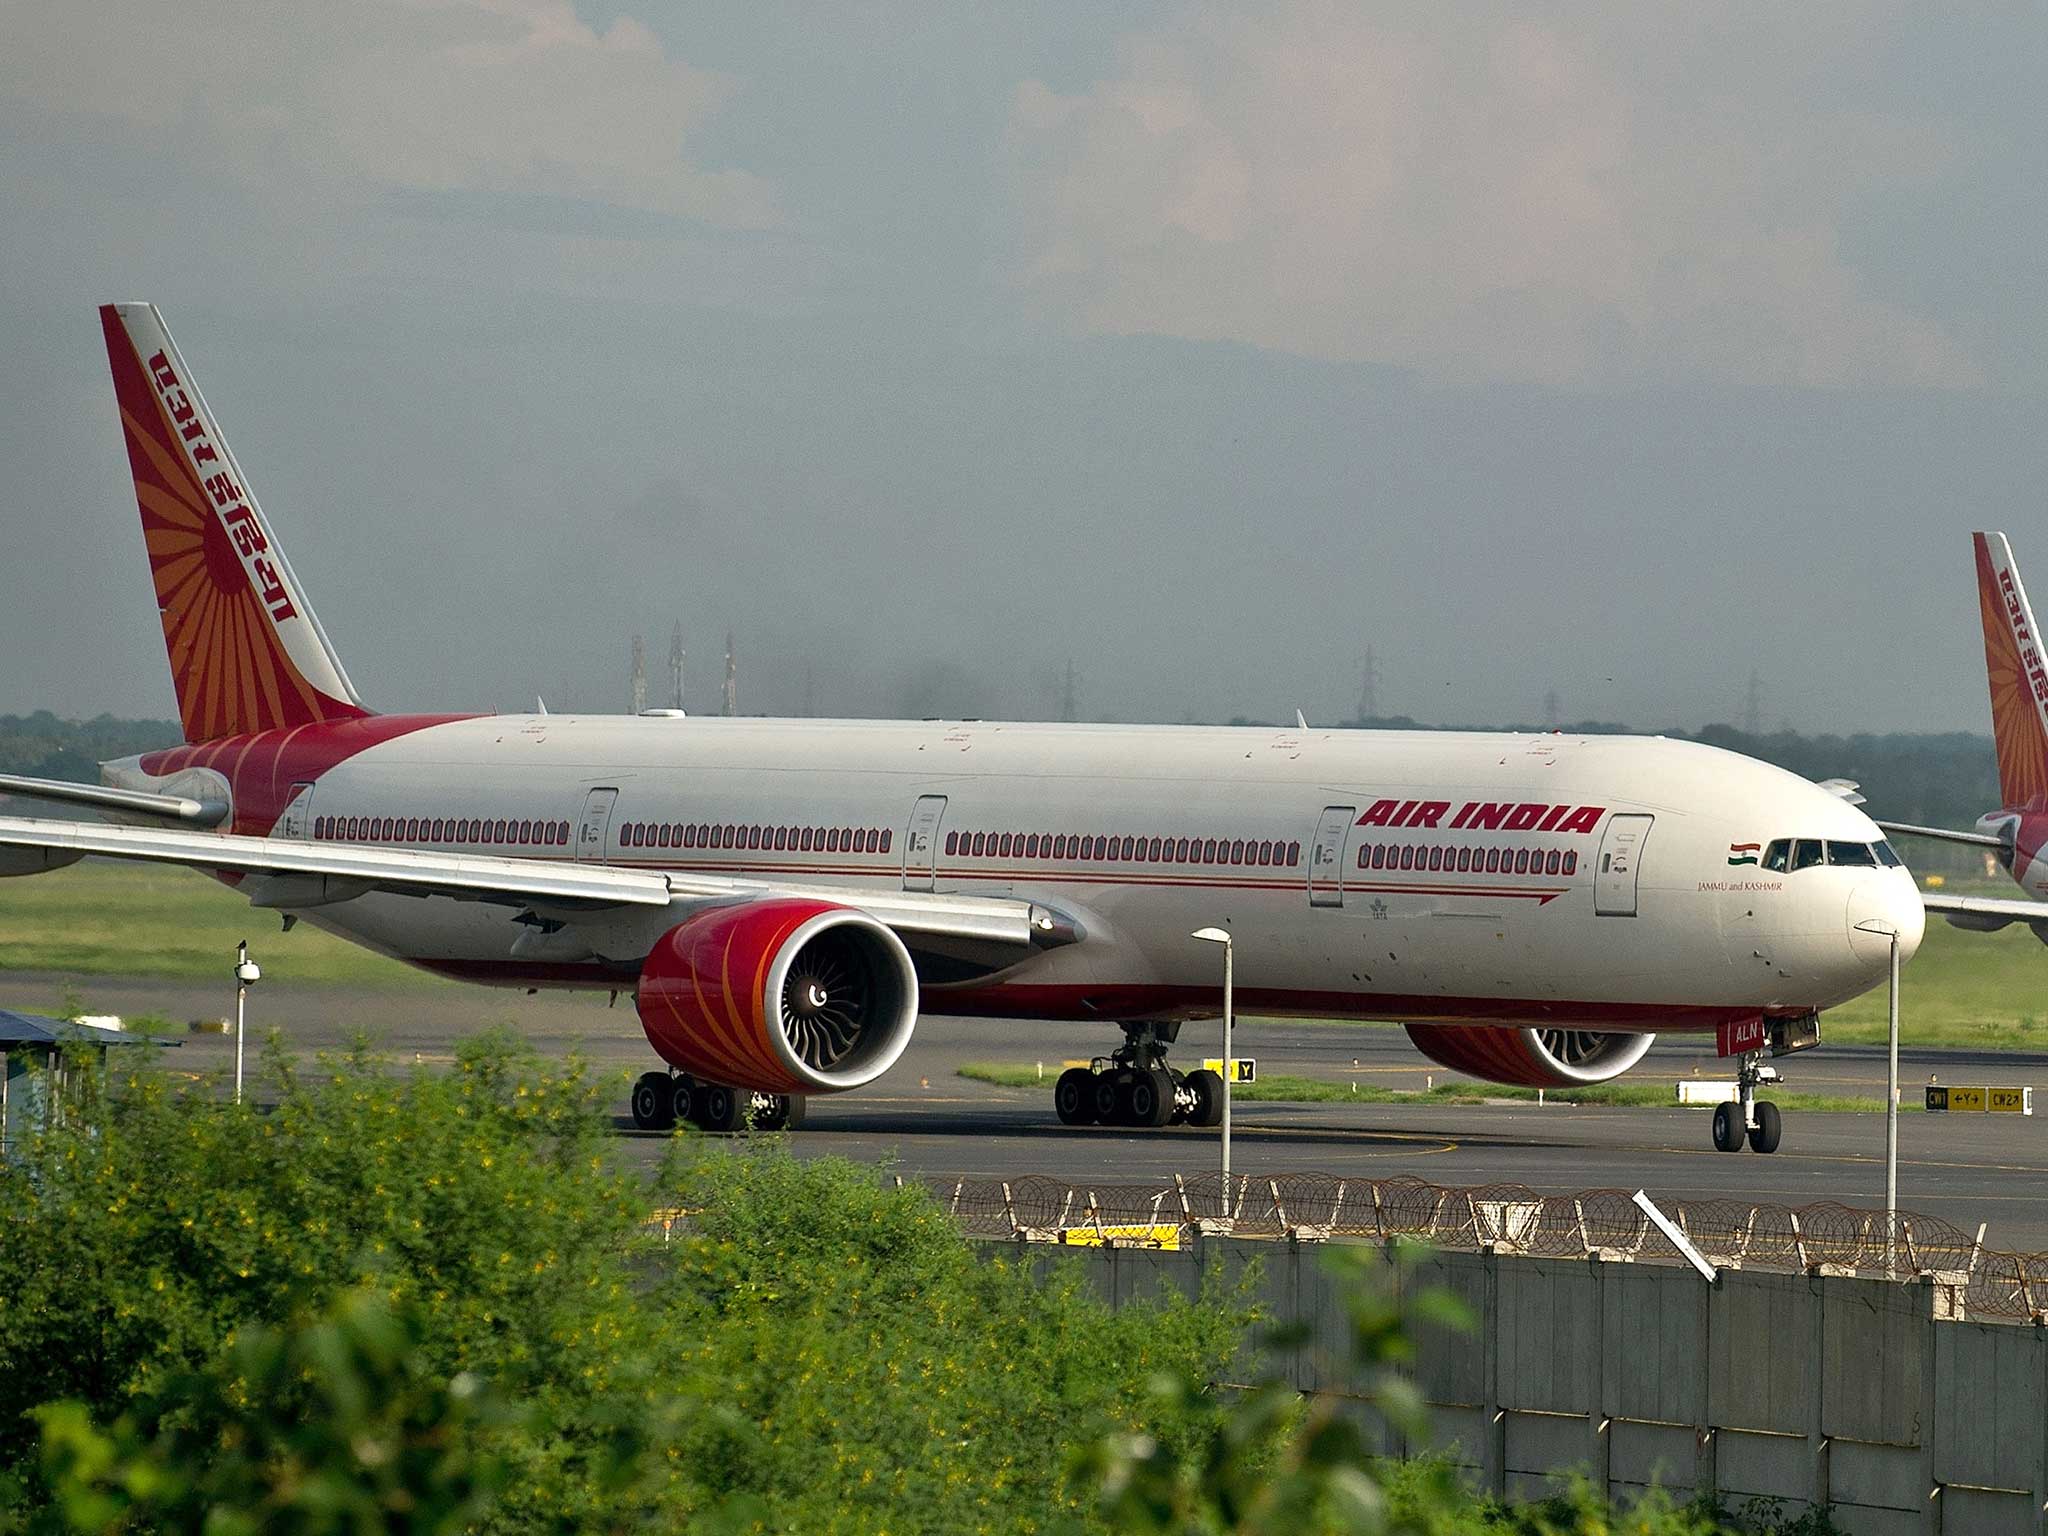 The incident took place at Indira Gandhi International Airport